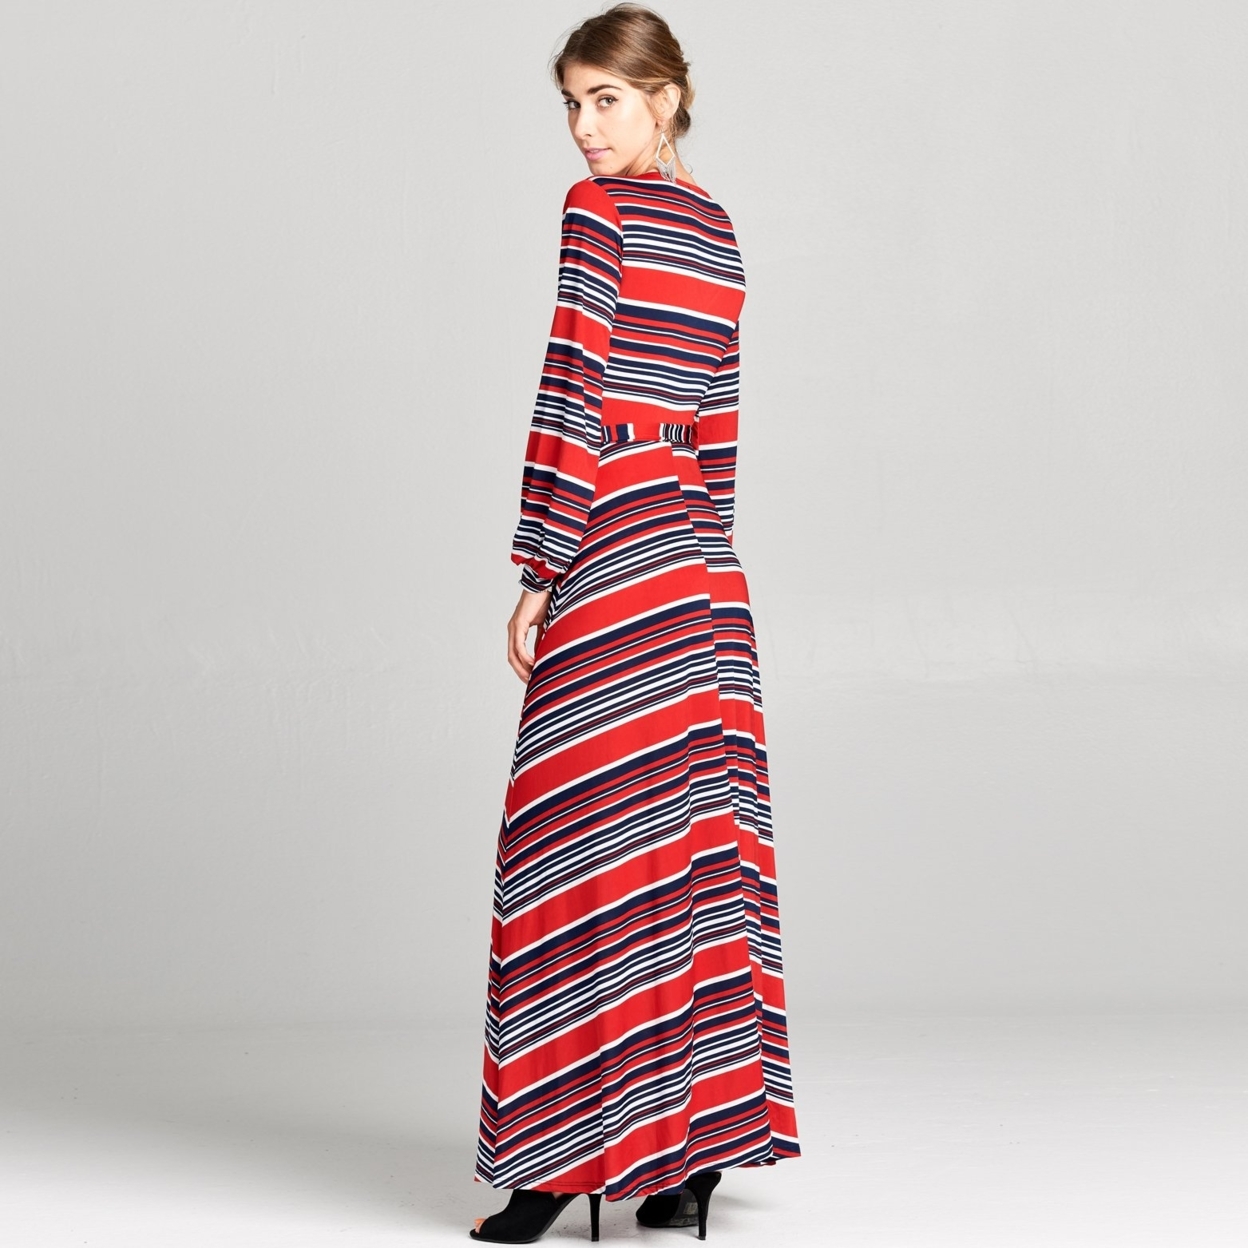 Cuffed Sleeve Venechia Stripe Dress - Mustard/navy, Medium (8-10)